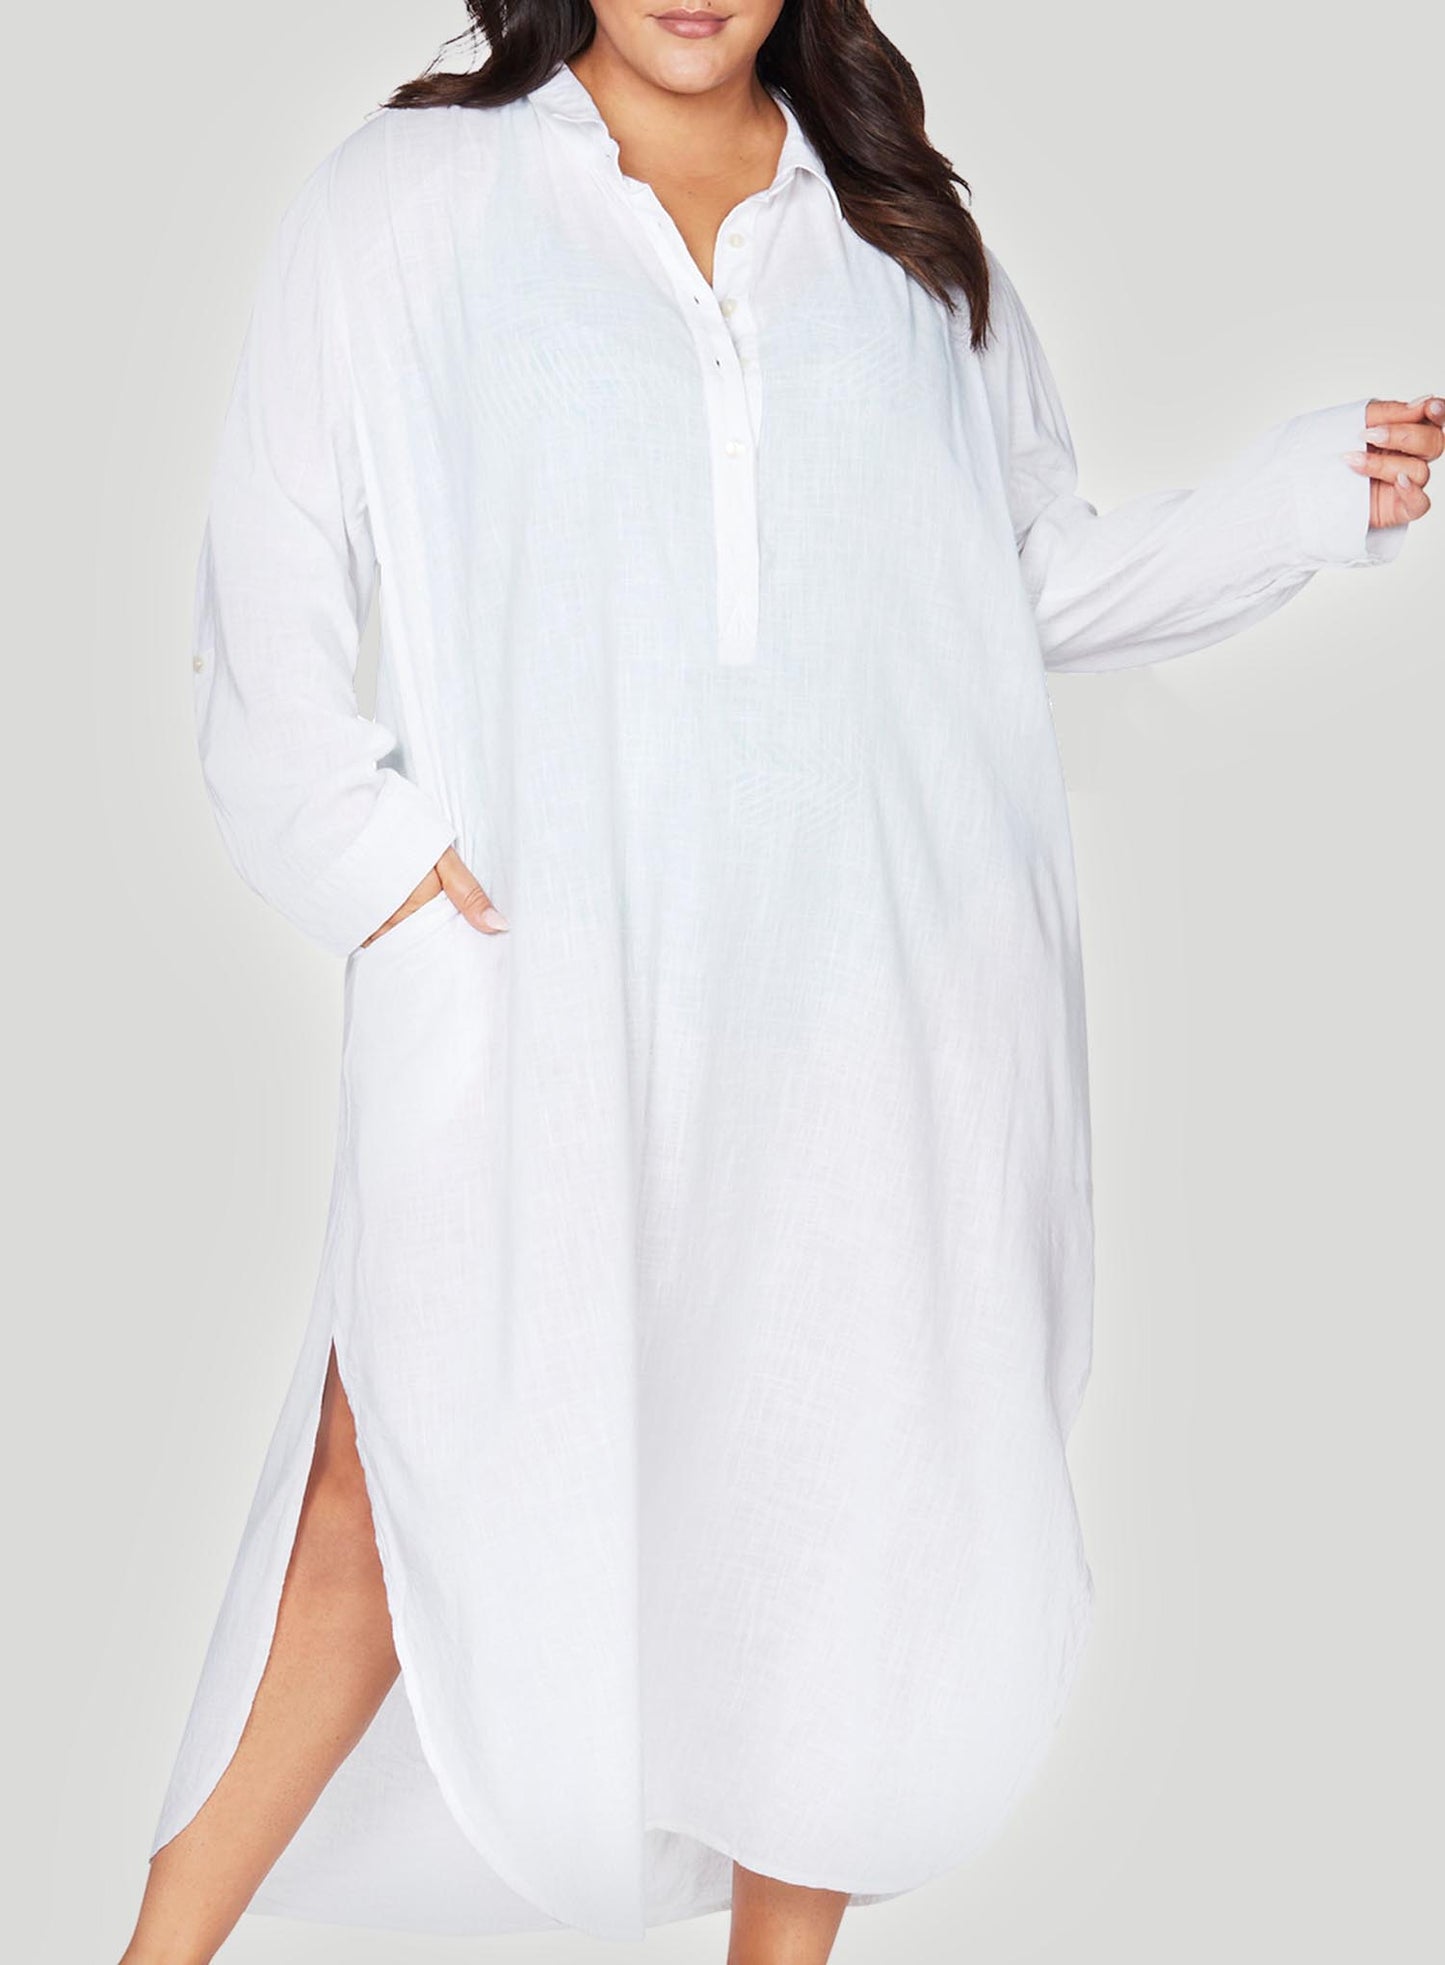 Artesands: Monteverdi Over Shirt Maxi Cover Up White